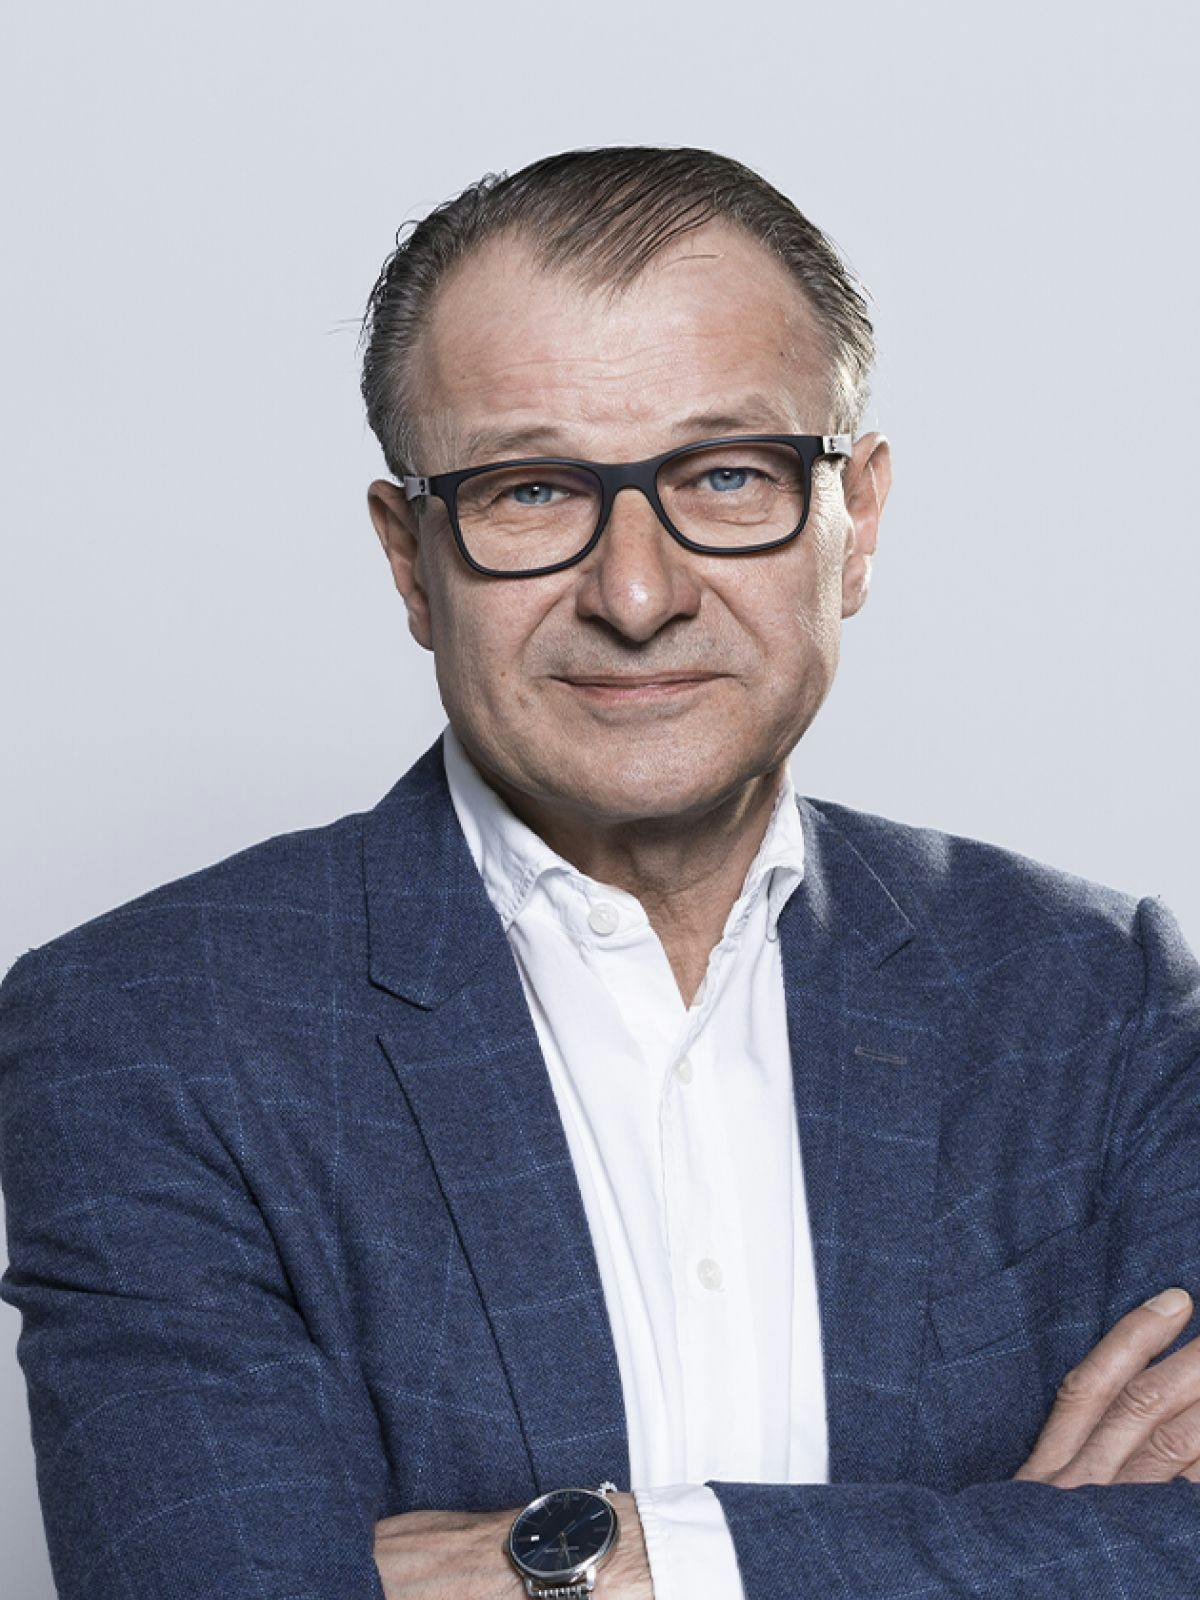 Petr Vykoukal - Portrait